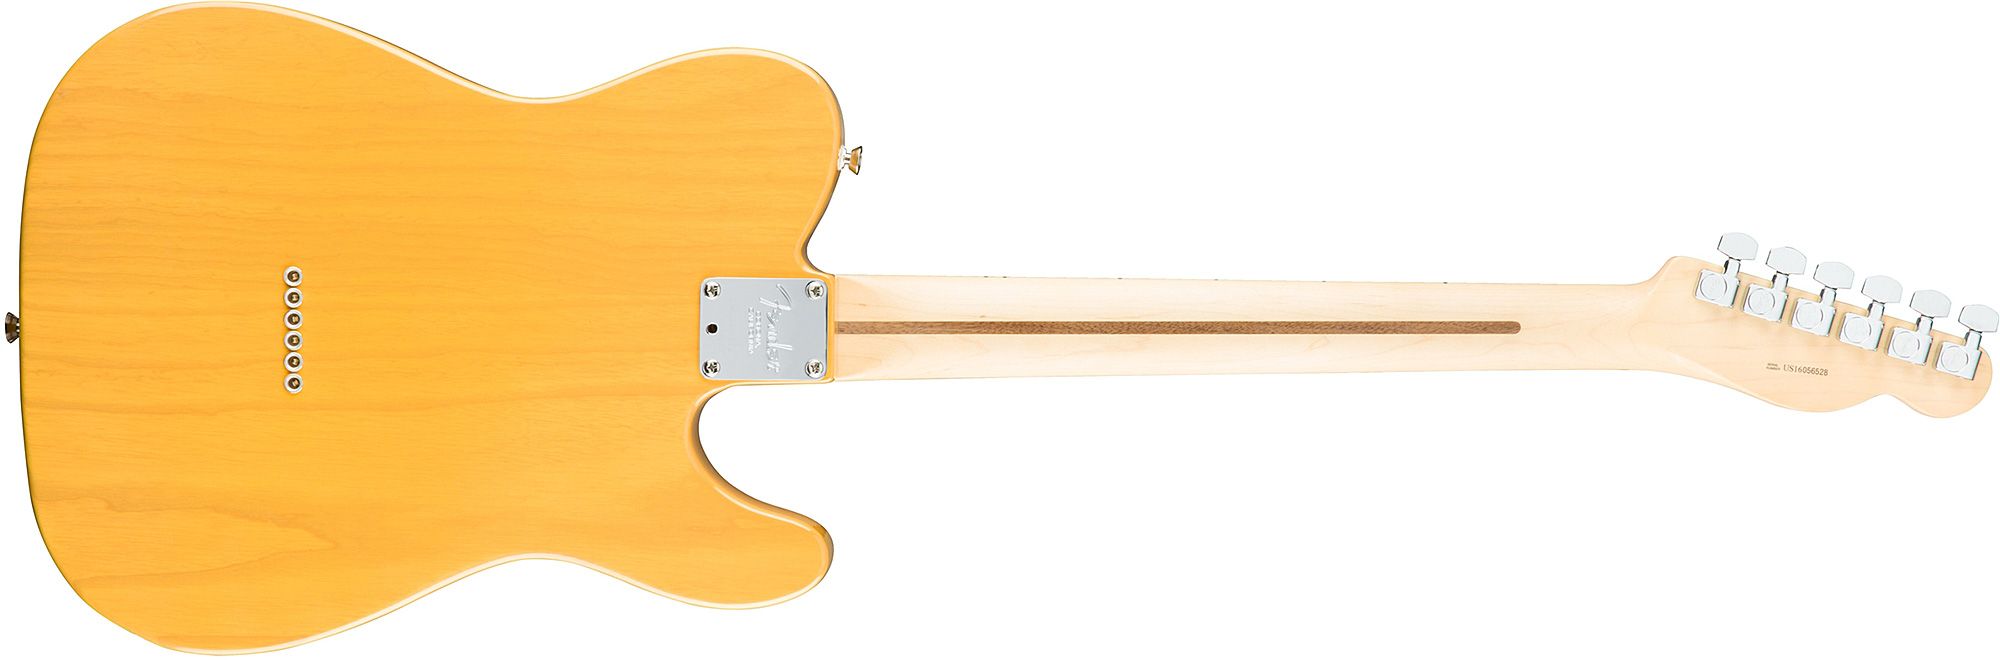 Fender Tele American Professional Lh Usa Gaucher 2s Mn - Butterscotch Blonde - Left-handed electric guitar - Variation 1